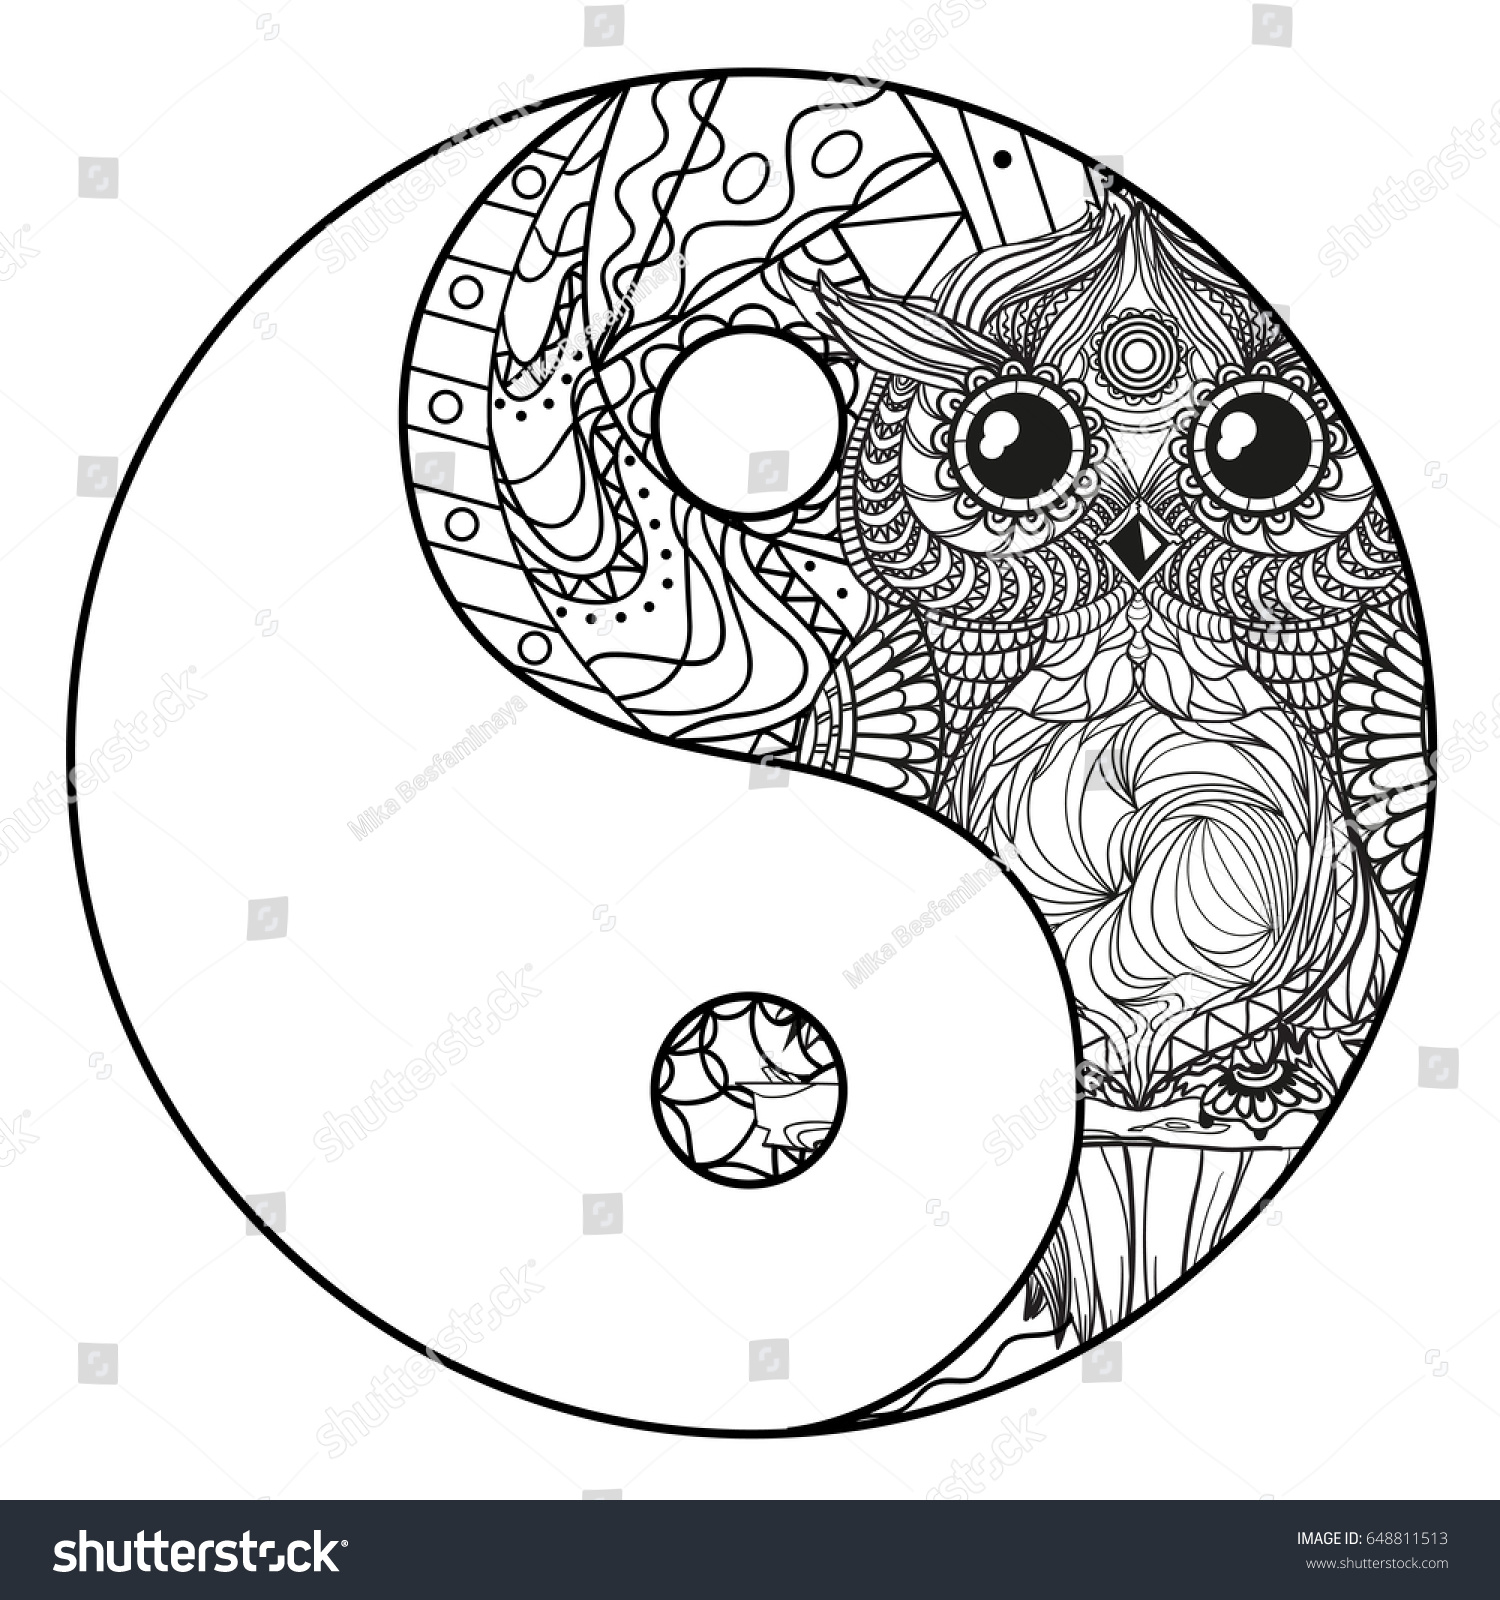 Download Yin Yang Zentangle Hand Drawn Mandala Stock Vector ...